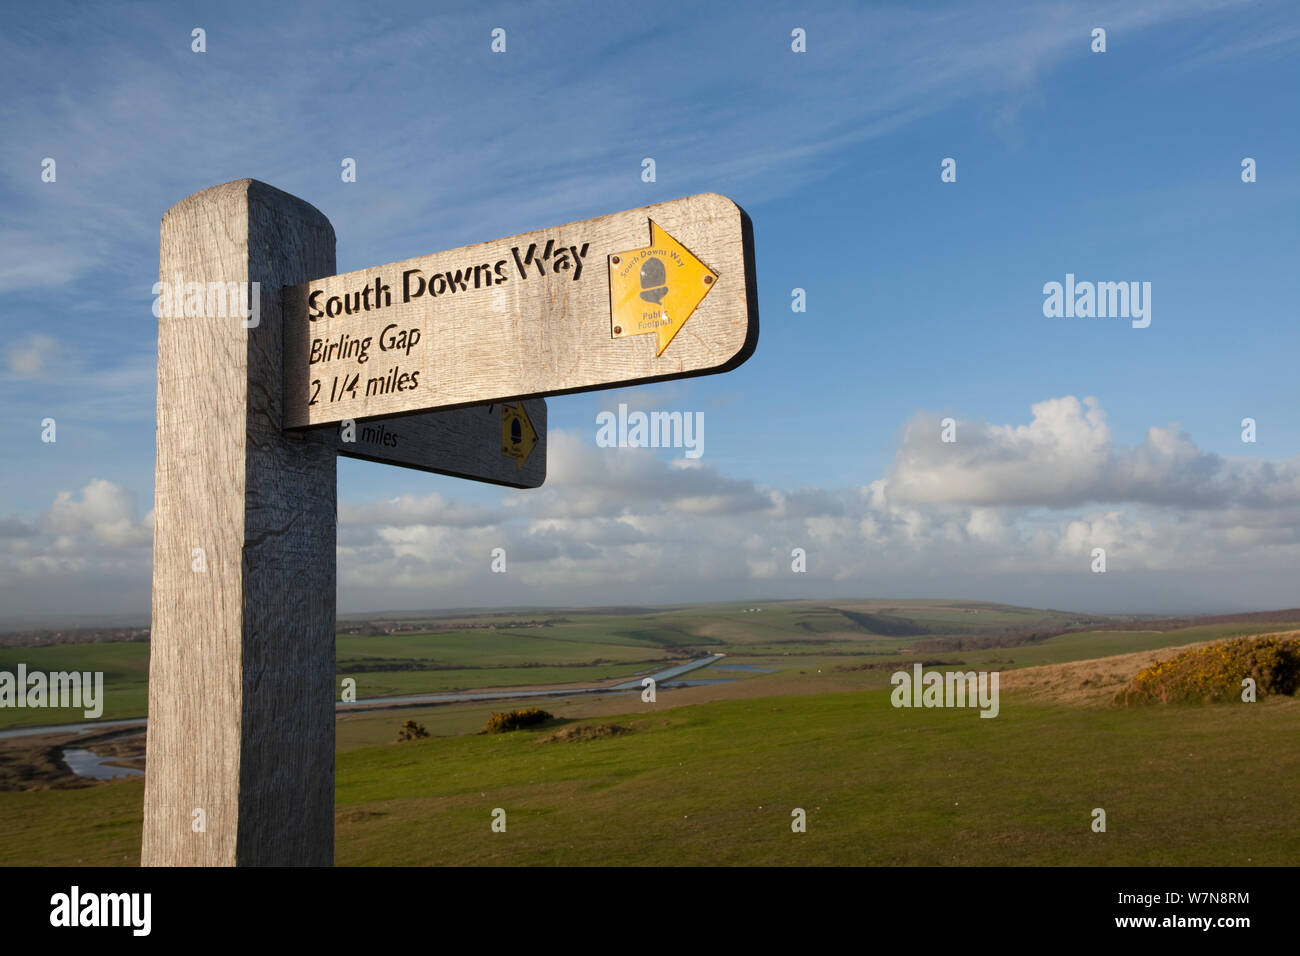 South Downs Modo lunga distanza sentiero segnaletica per Birling Gap a sette sorelle Country Park, South Downs, Inghilterra. Foto Stock